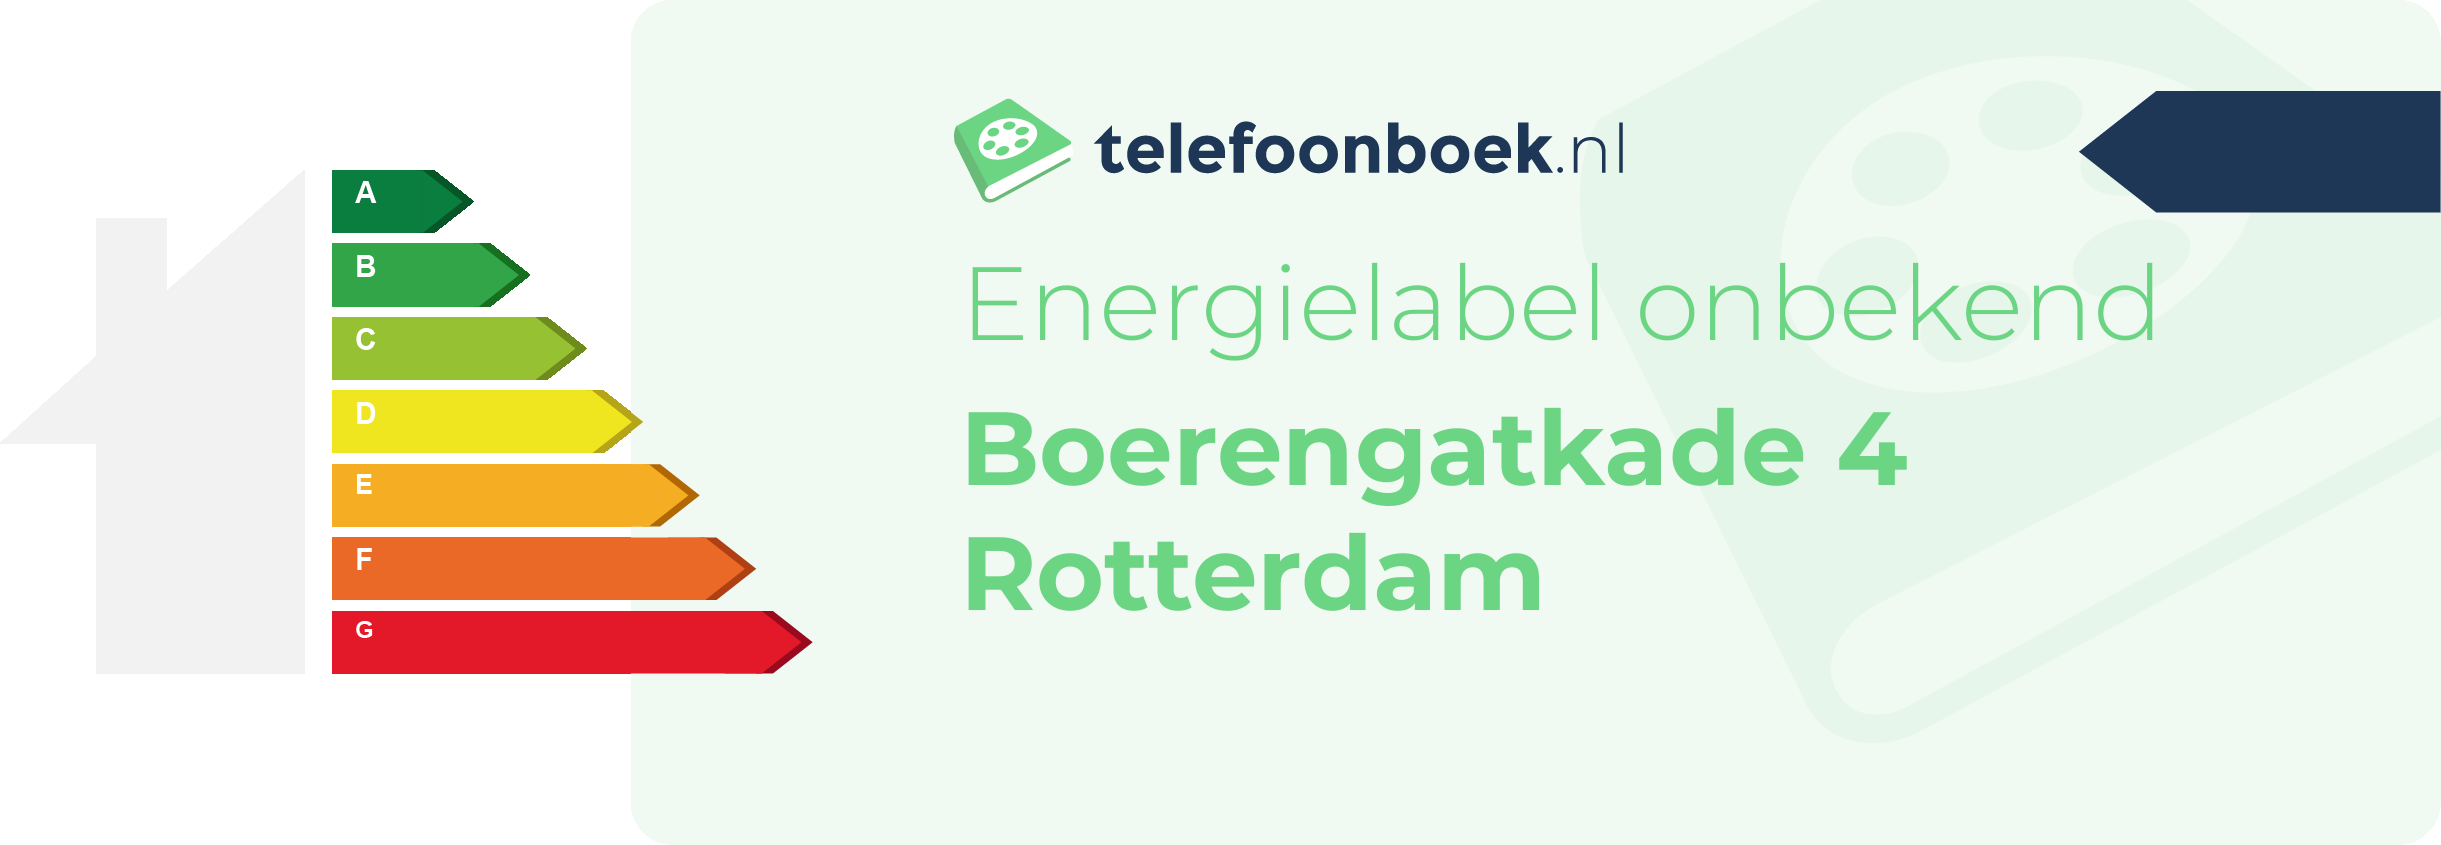 Energielabel Boerengatkade 4 Rotterdam